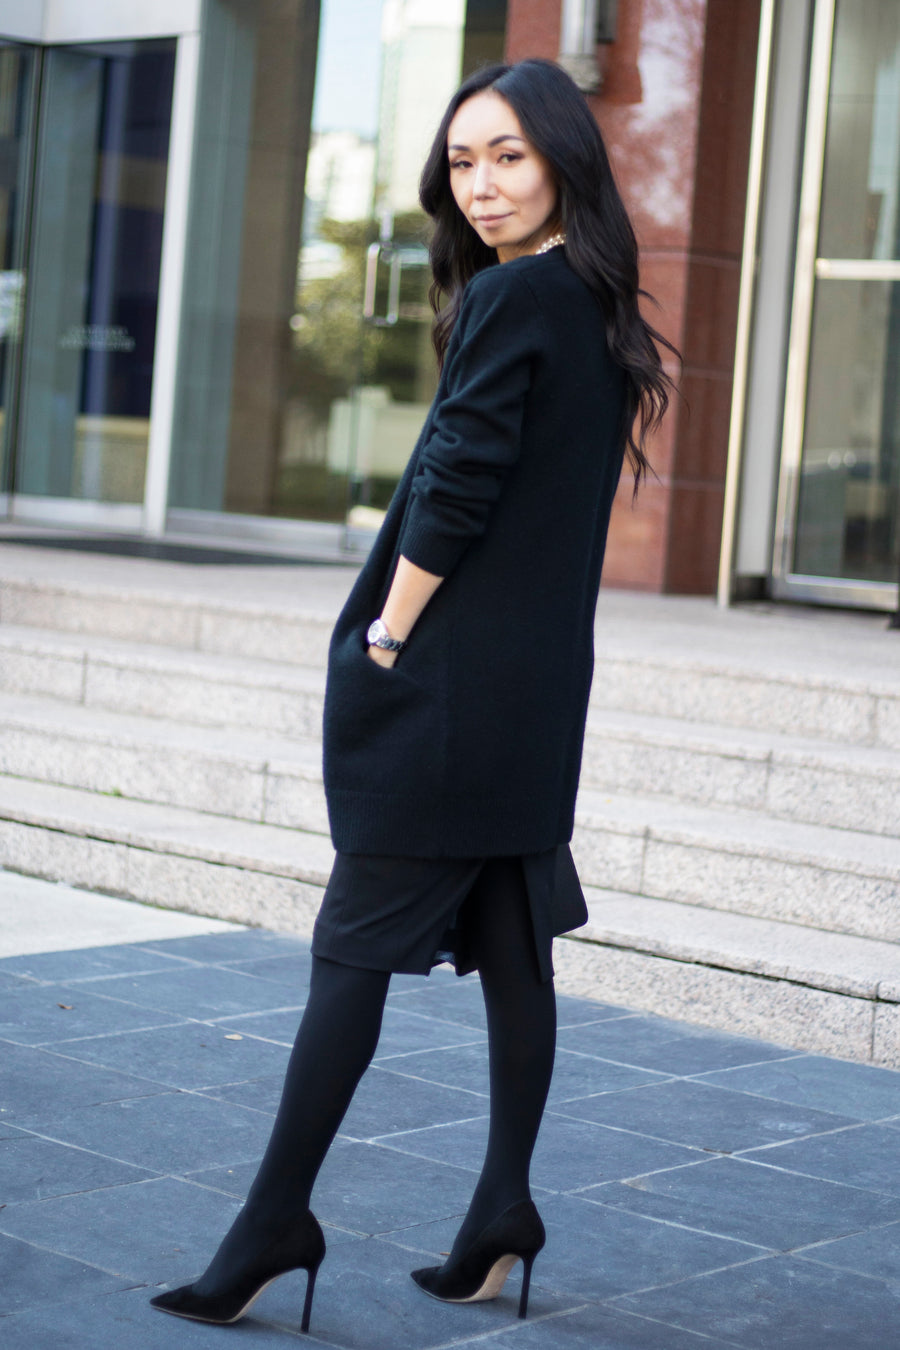 pine cashmere adeline women's 100% pure cashmere cardigan sweater in black